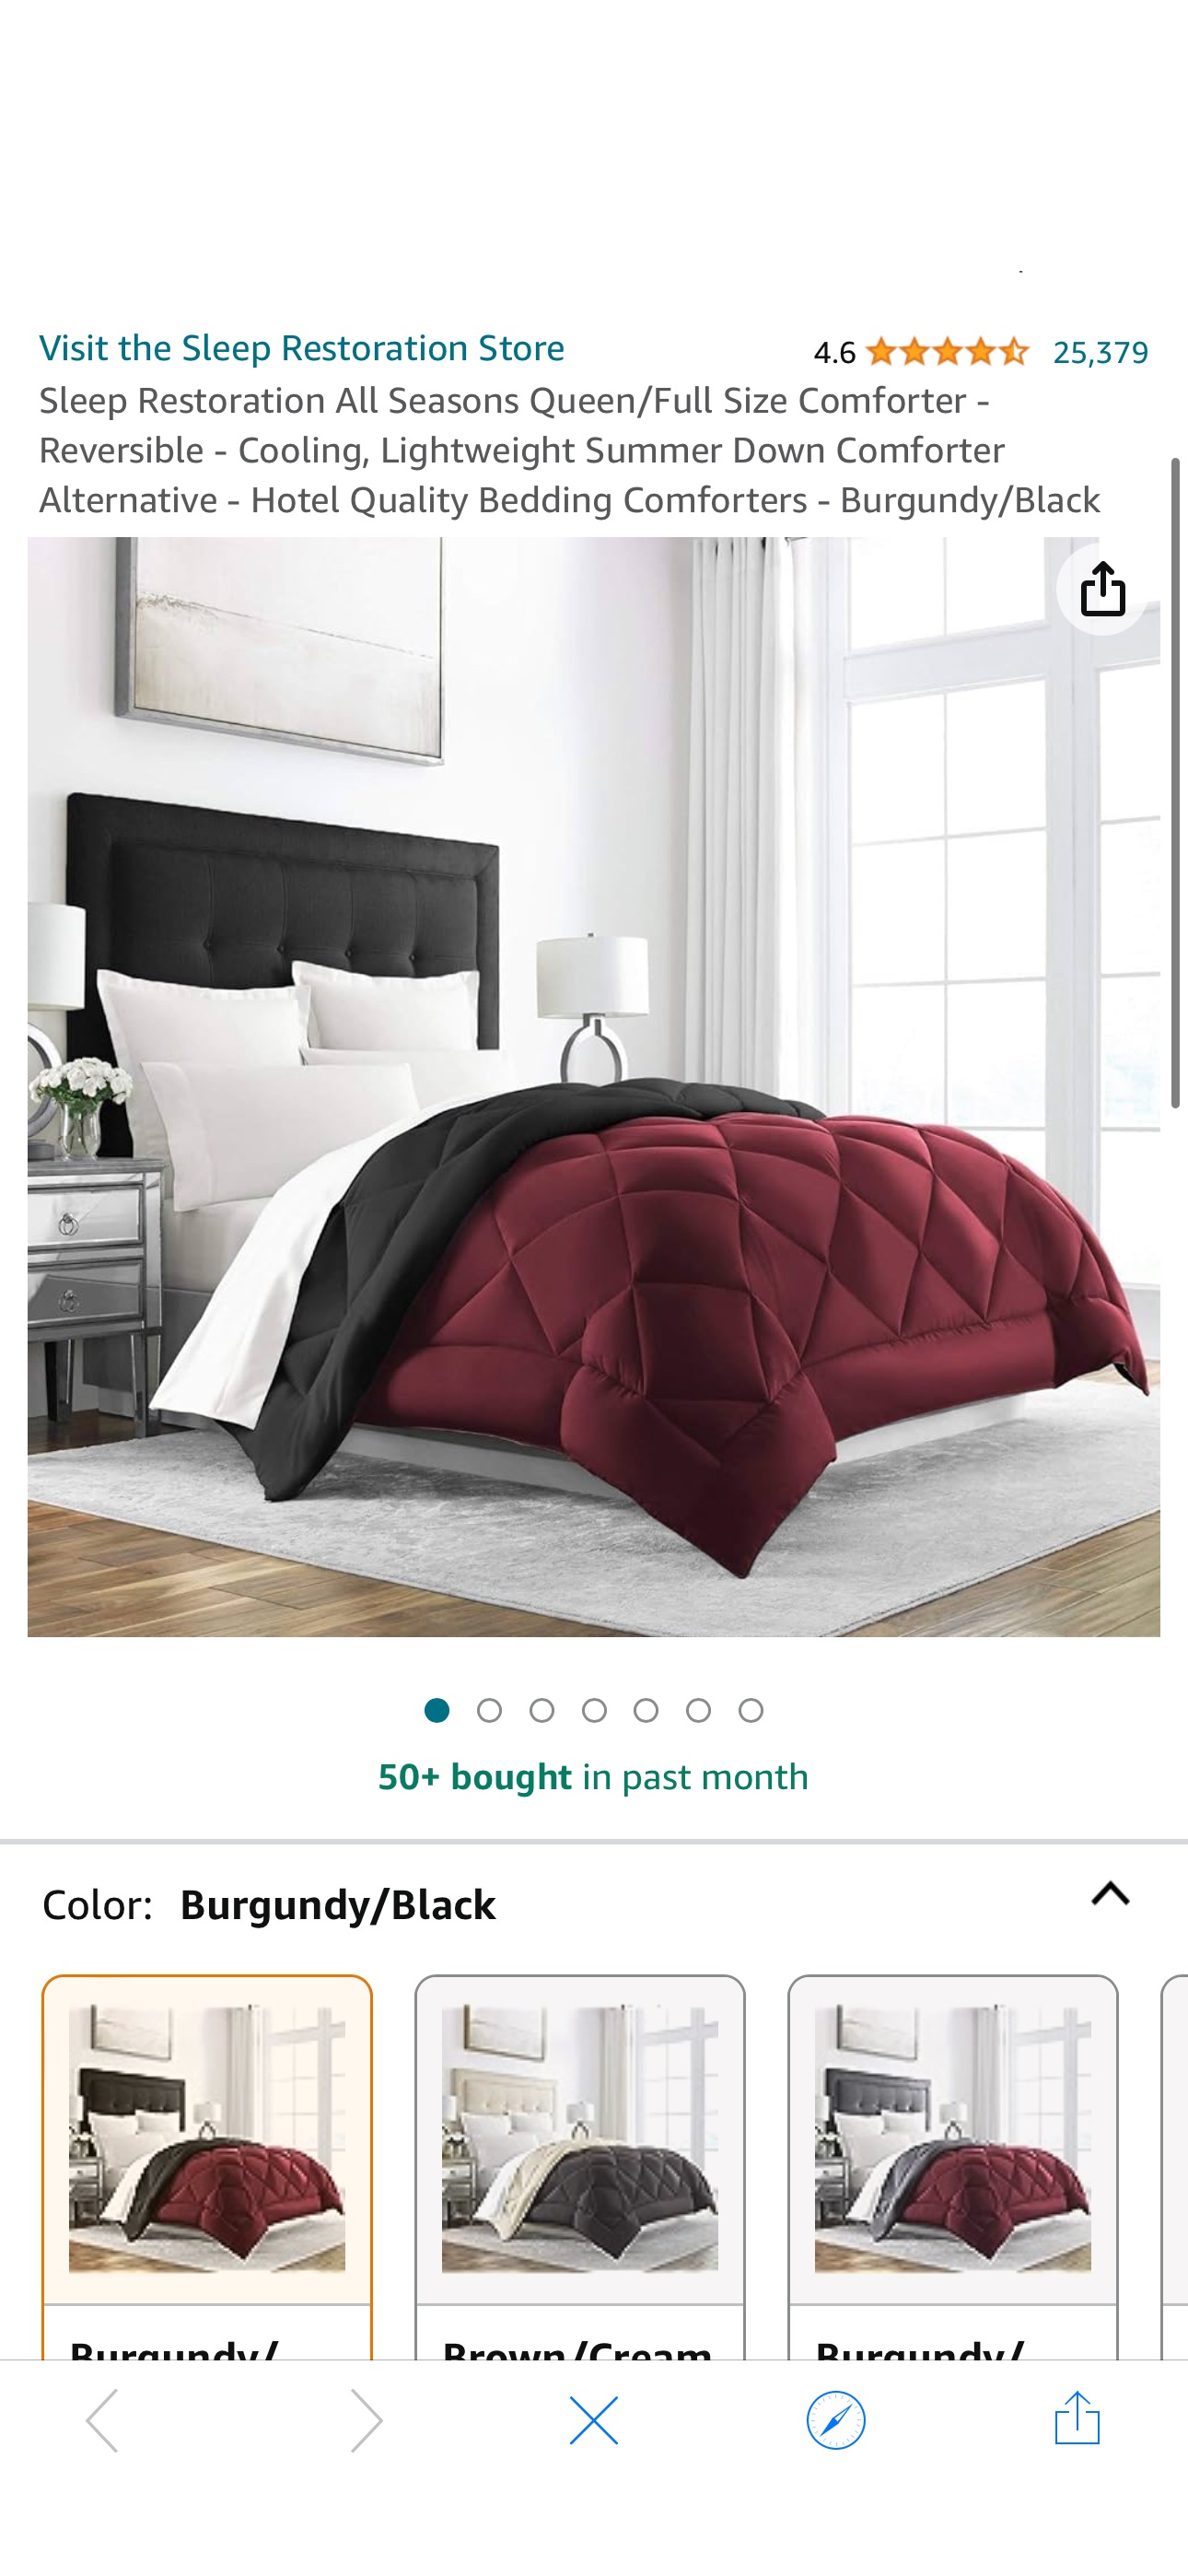 Amazon.com: Sleep Restoration All Seasons Queen/Full Size Comforter - Reversible - Cooling, Lightweight Summer Down Comforter Alternative - Hotel Quality Bedding Comforters - Burgundy/Black : Home & K